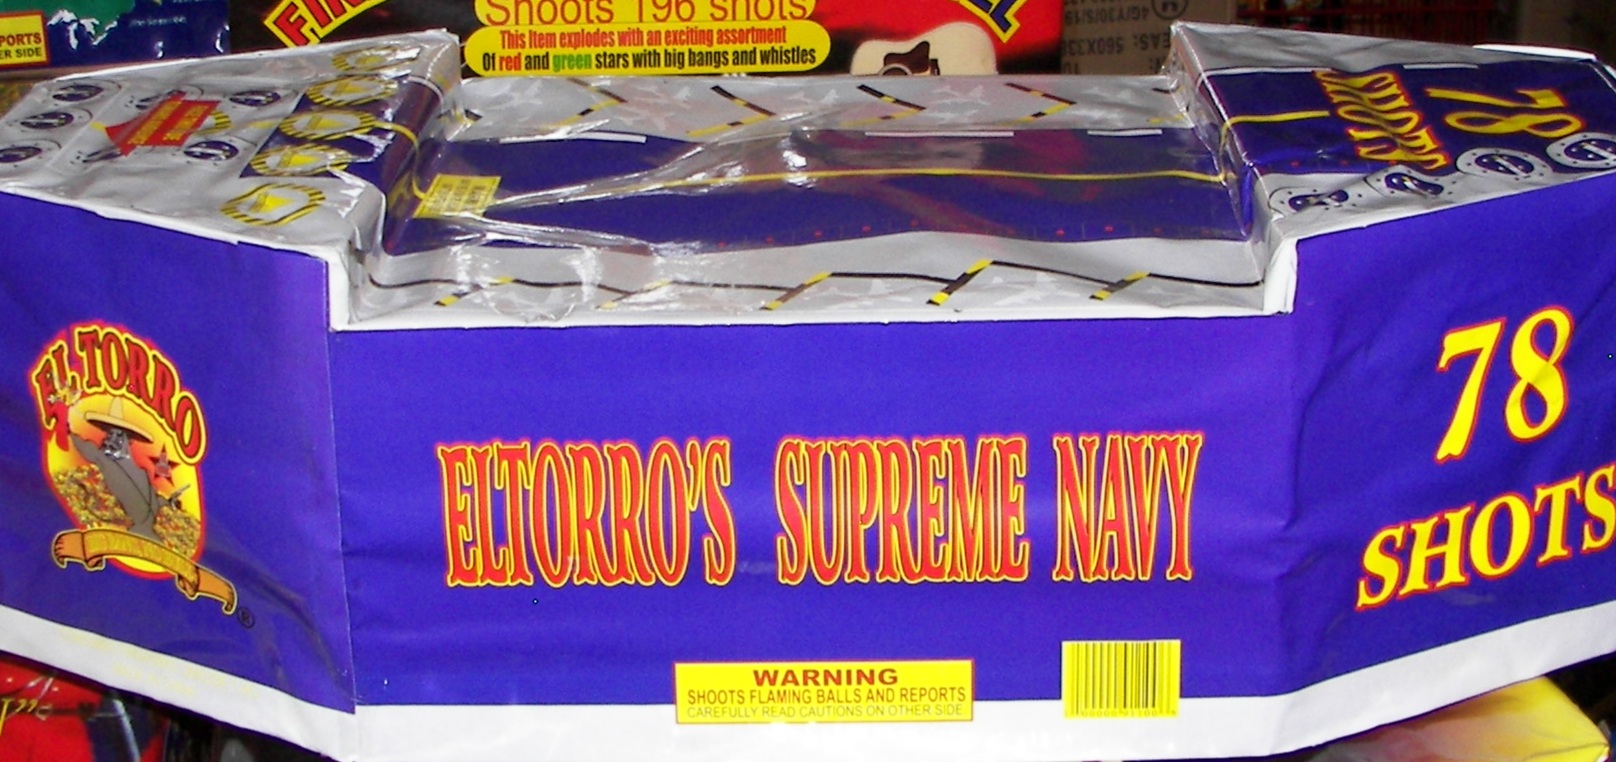 EL TORRO'S SUPREME NAVY (A 500 gram, grand finale)-image